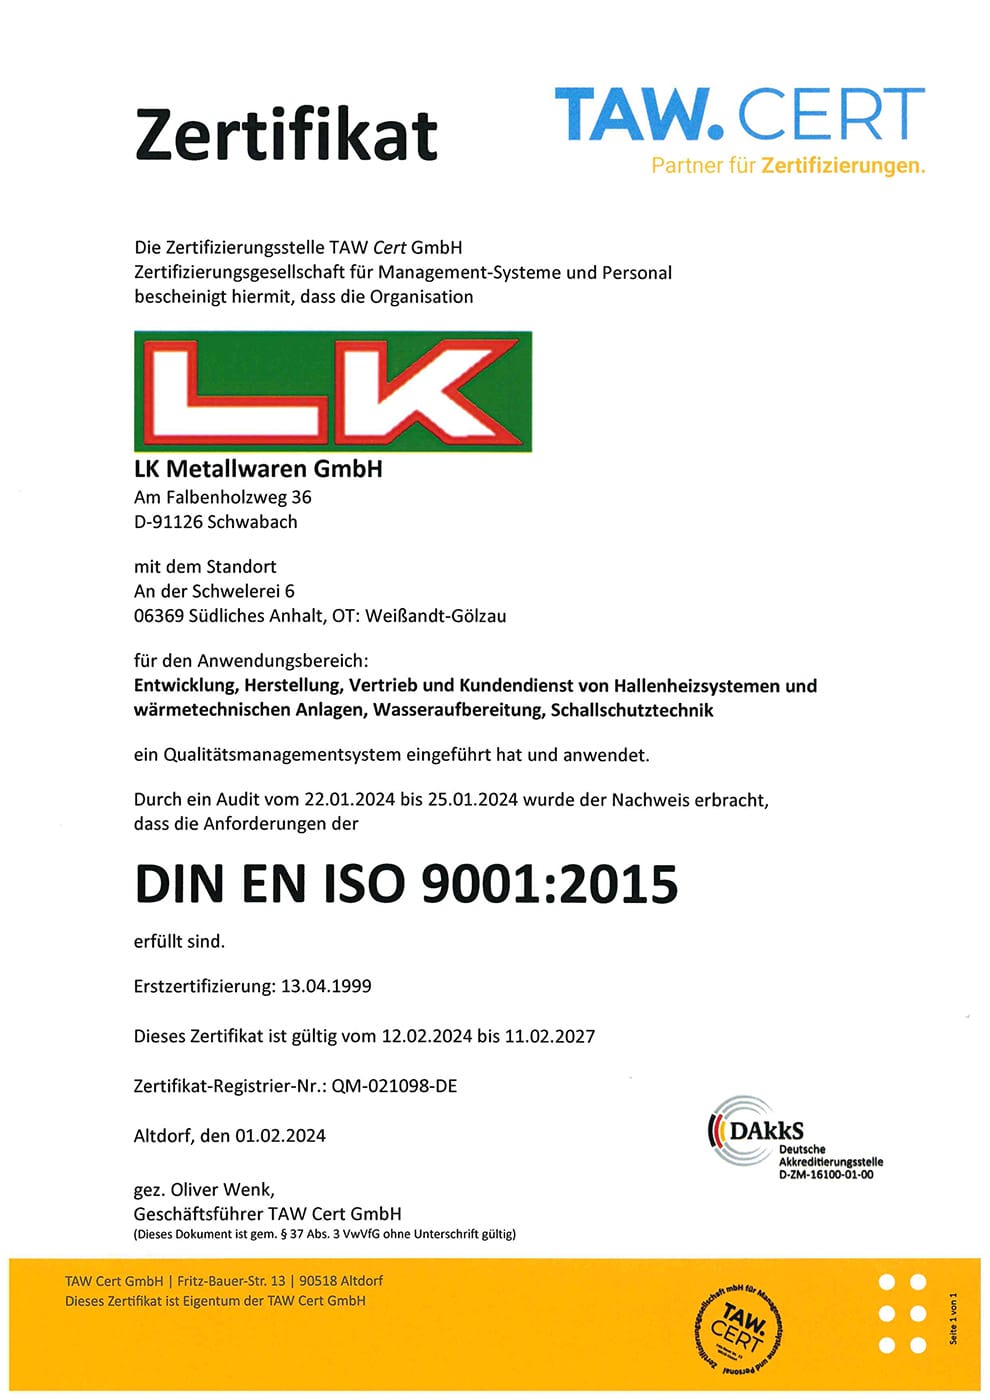 Zertifikat - TAW.CERT - DIN EN ISO 9001:2015